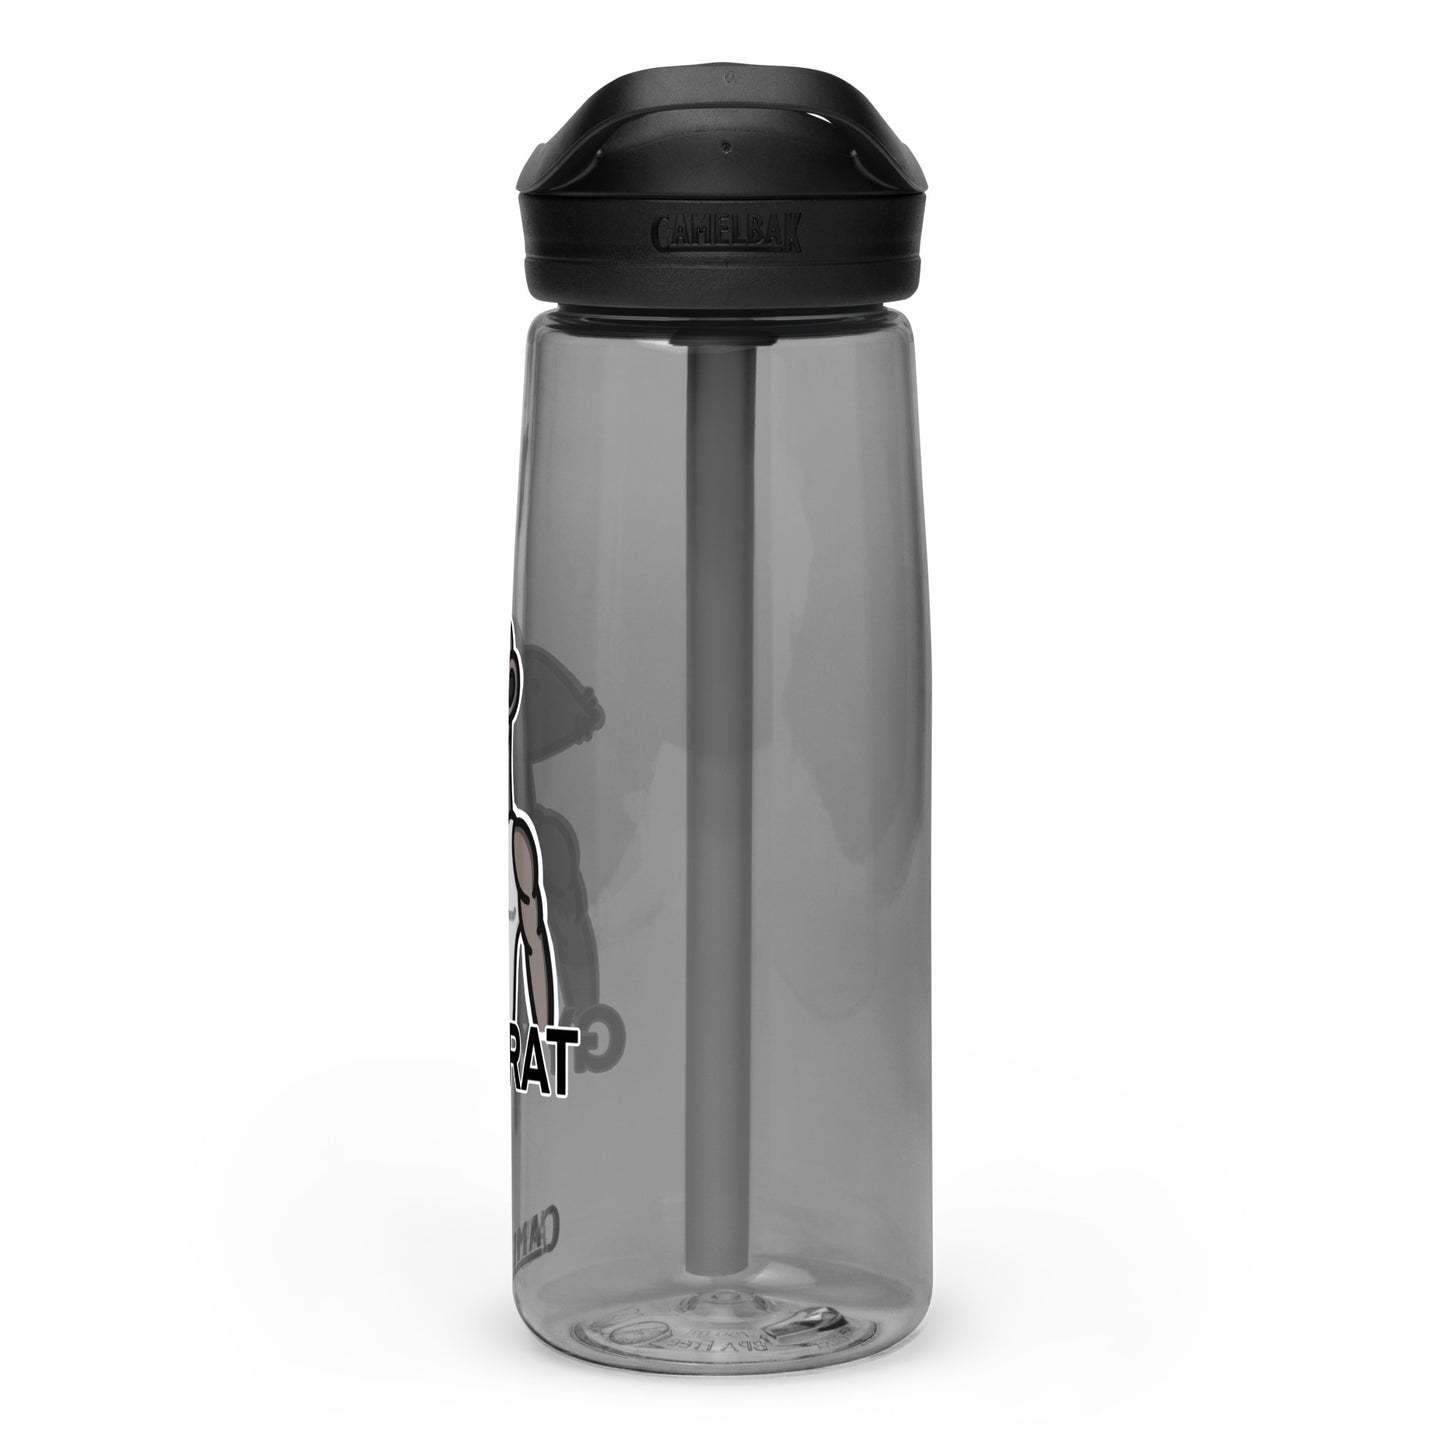 “Gym Rat” Sports water bottle